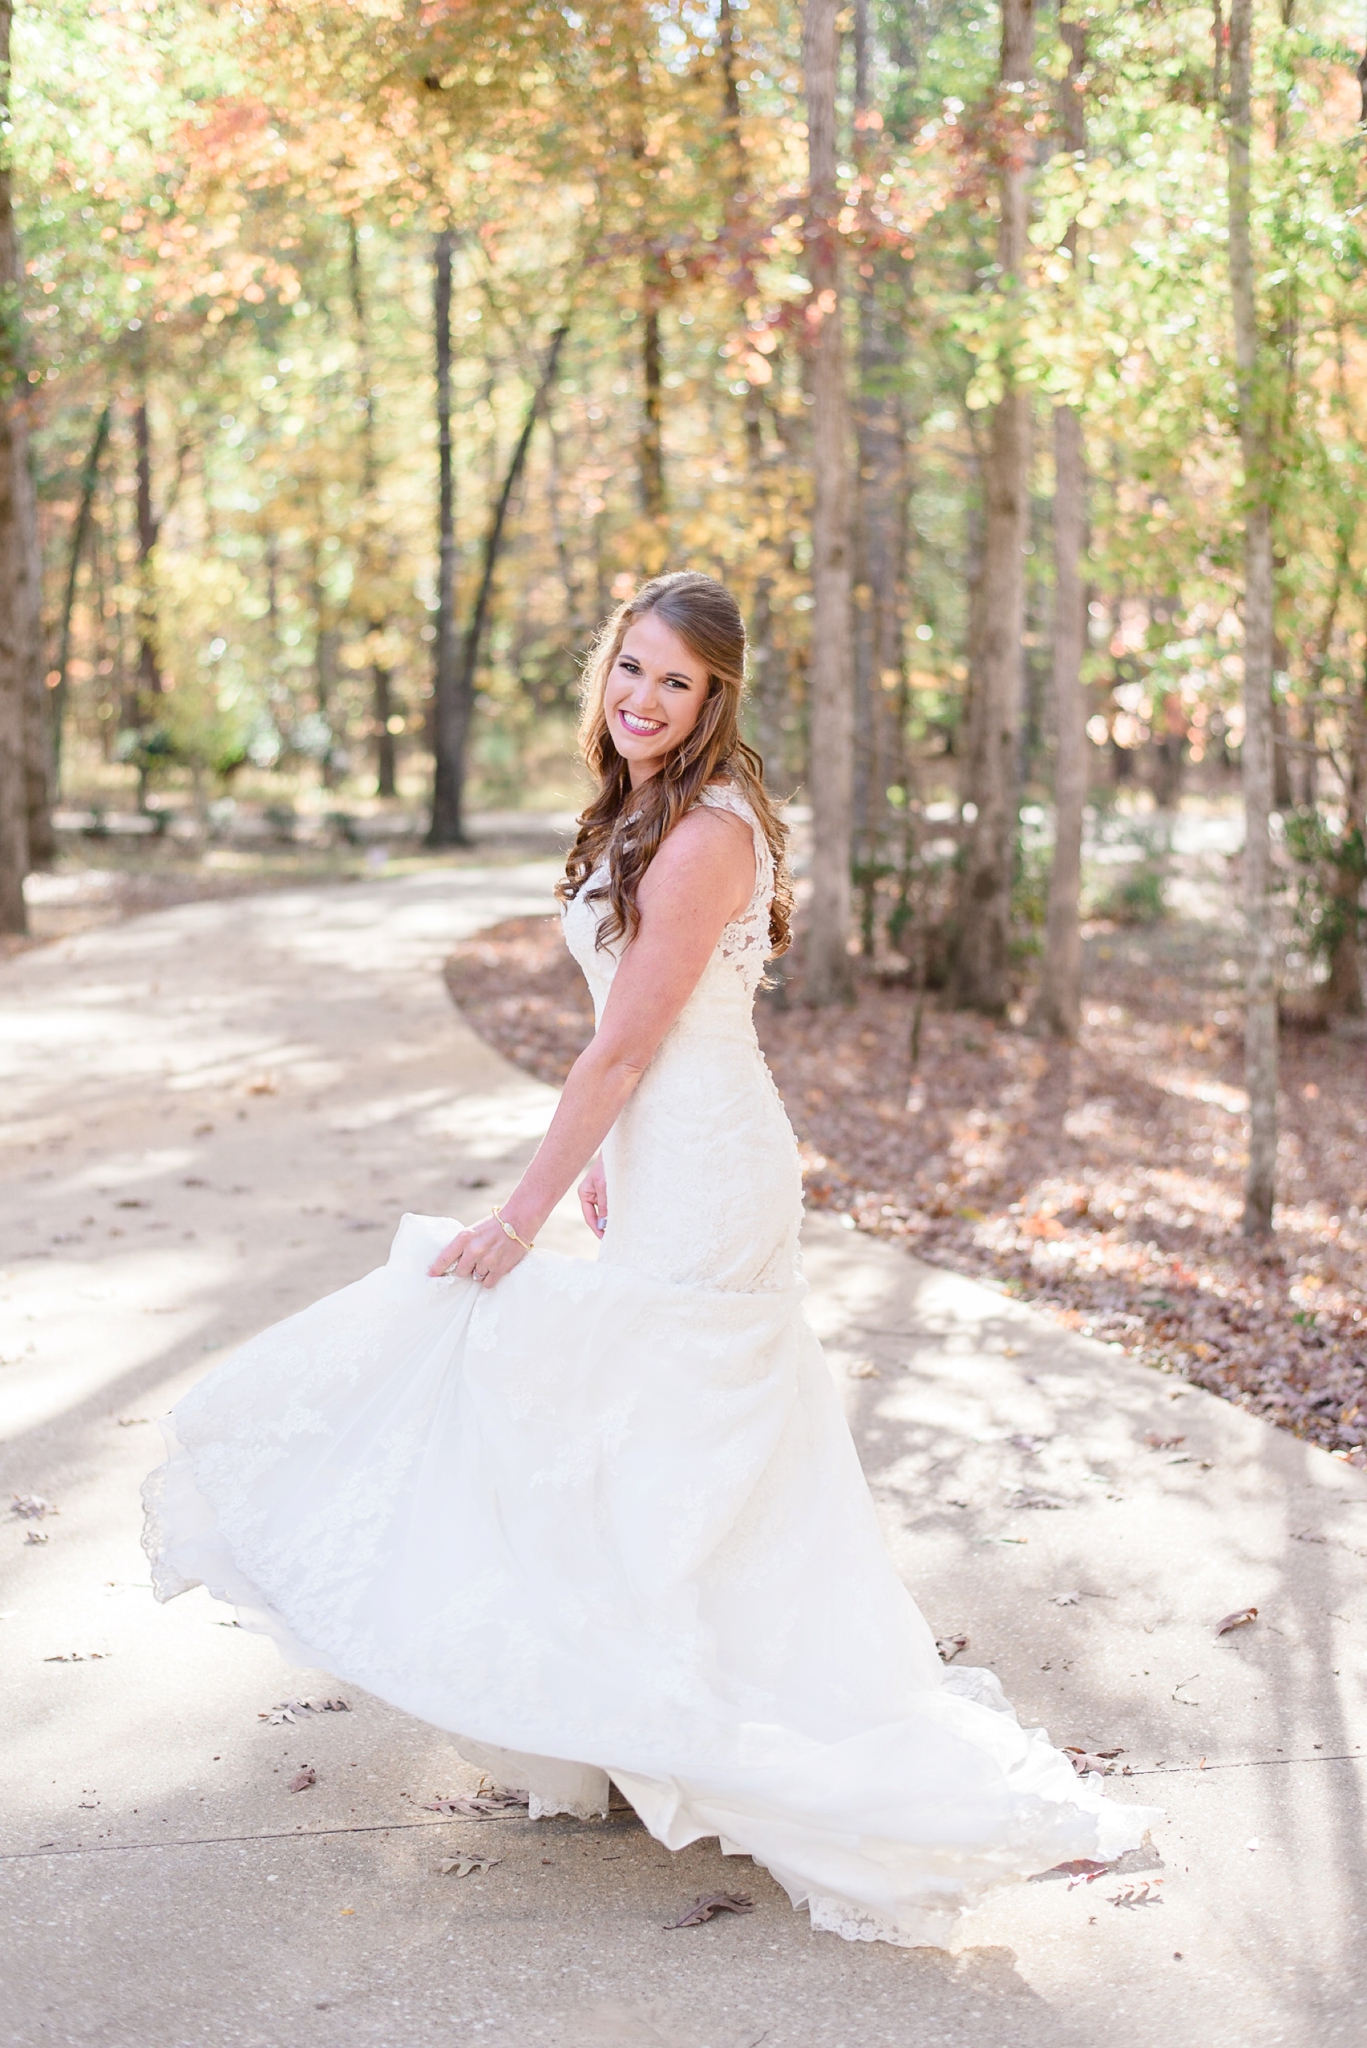 Montgomery Antebellum Home Wedding Day | Birmingham Alabama Wedding Photographer_0006.jpg